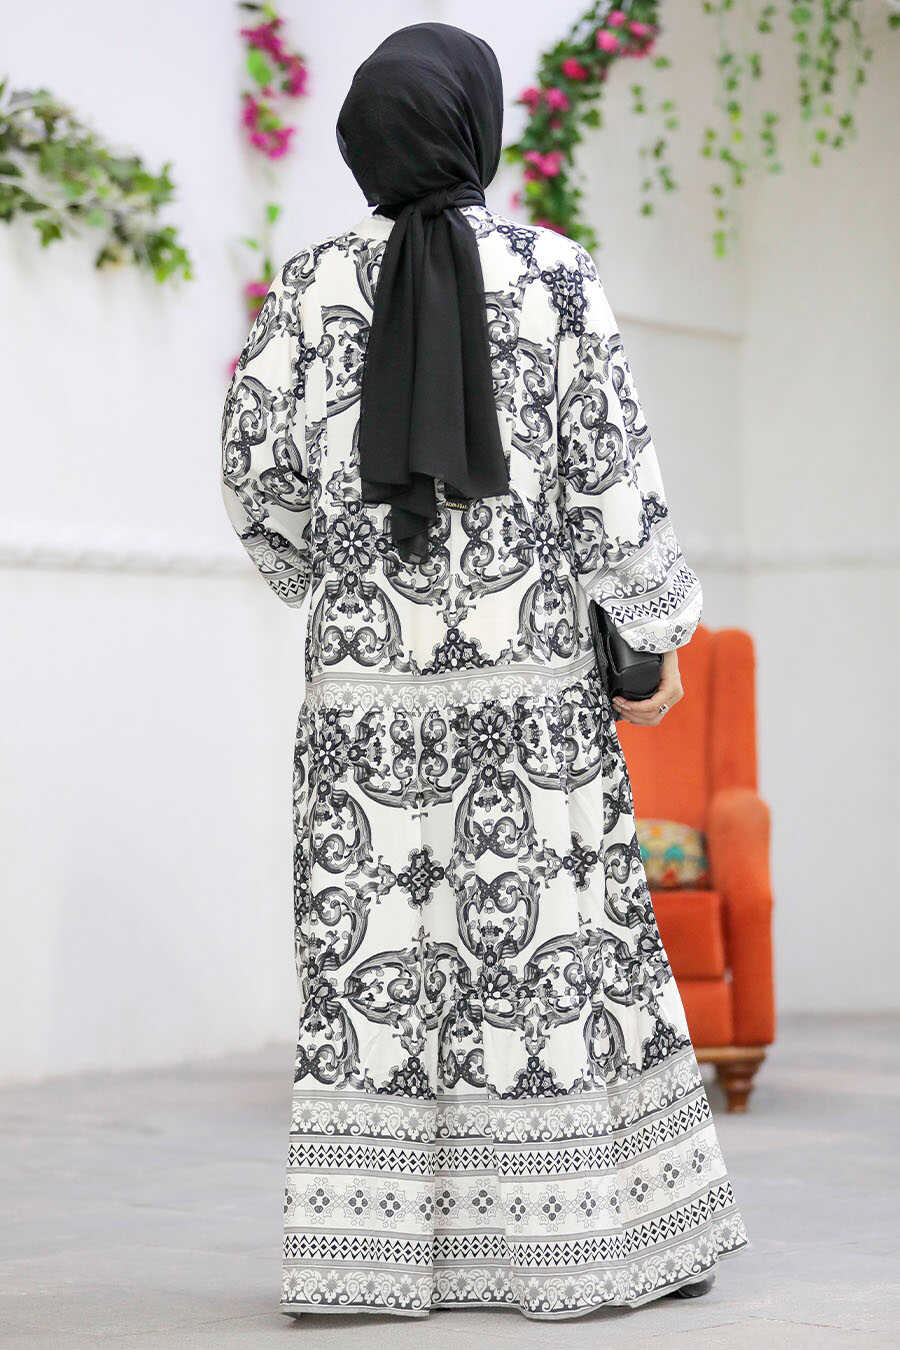 Neva Style - Black Long Muslim Dress 51951S